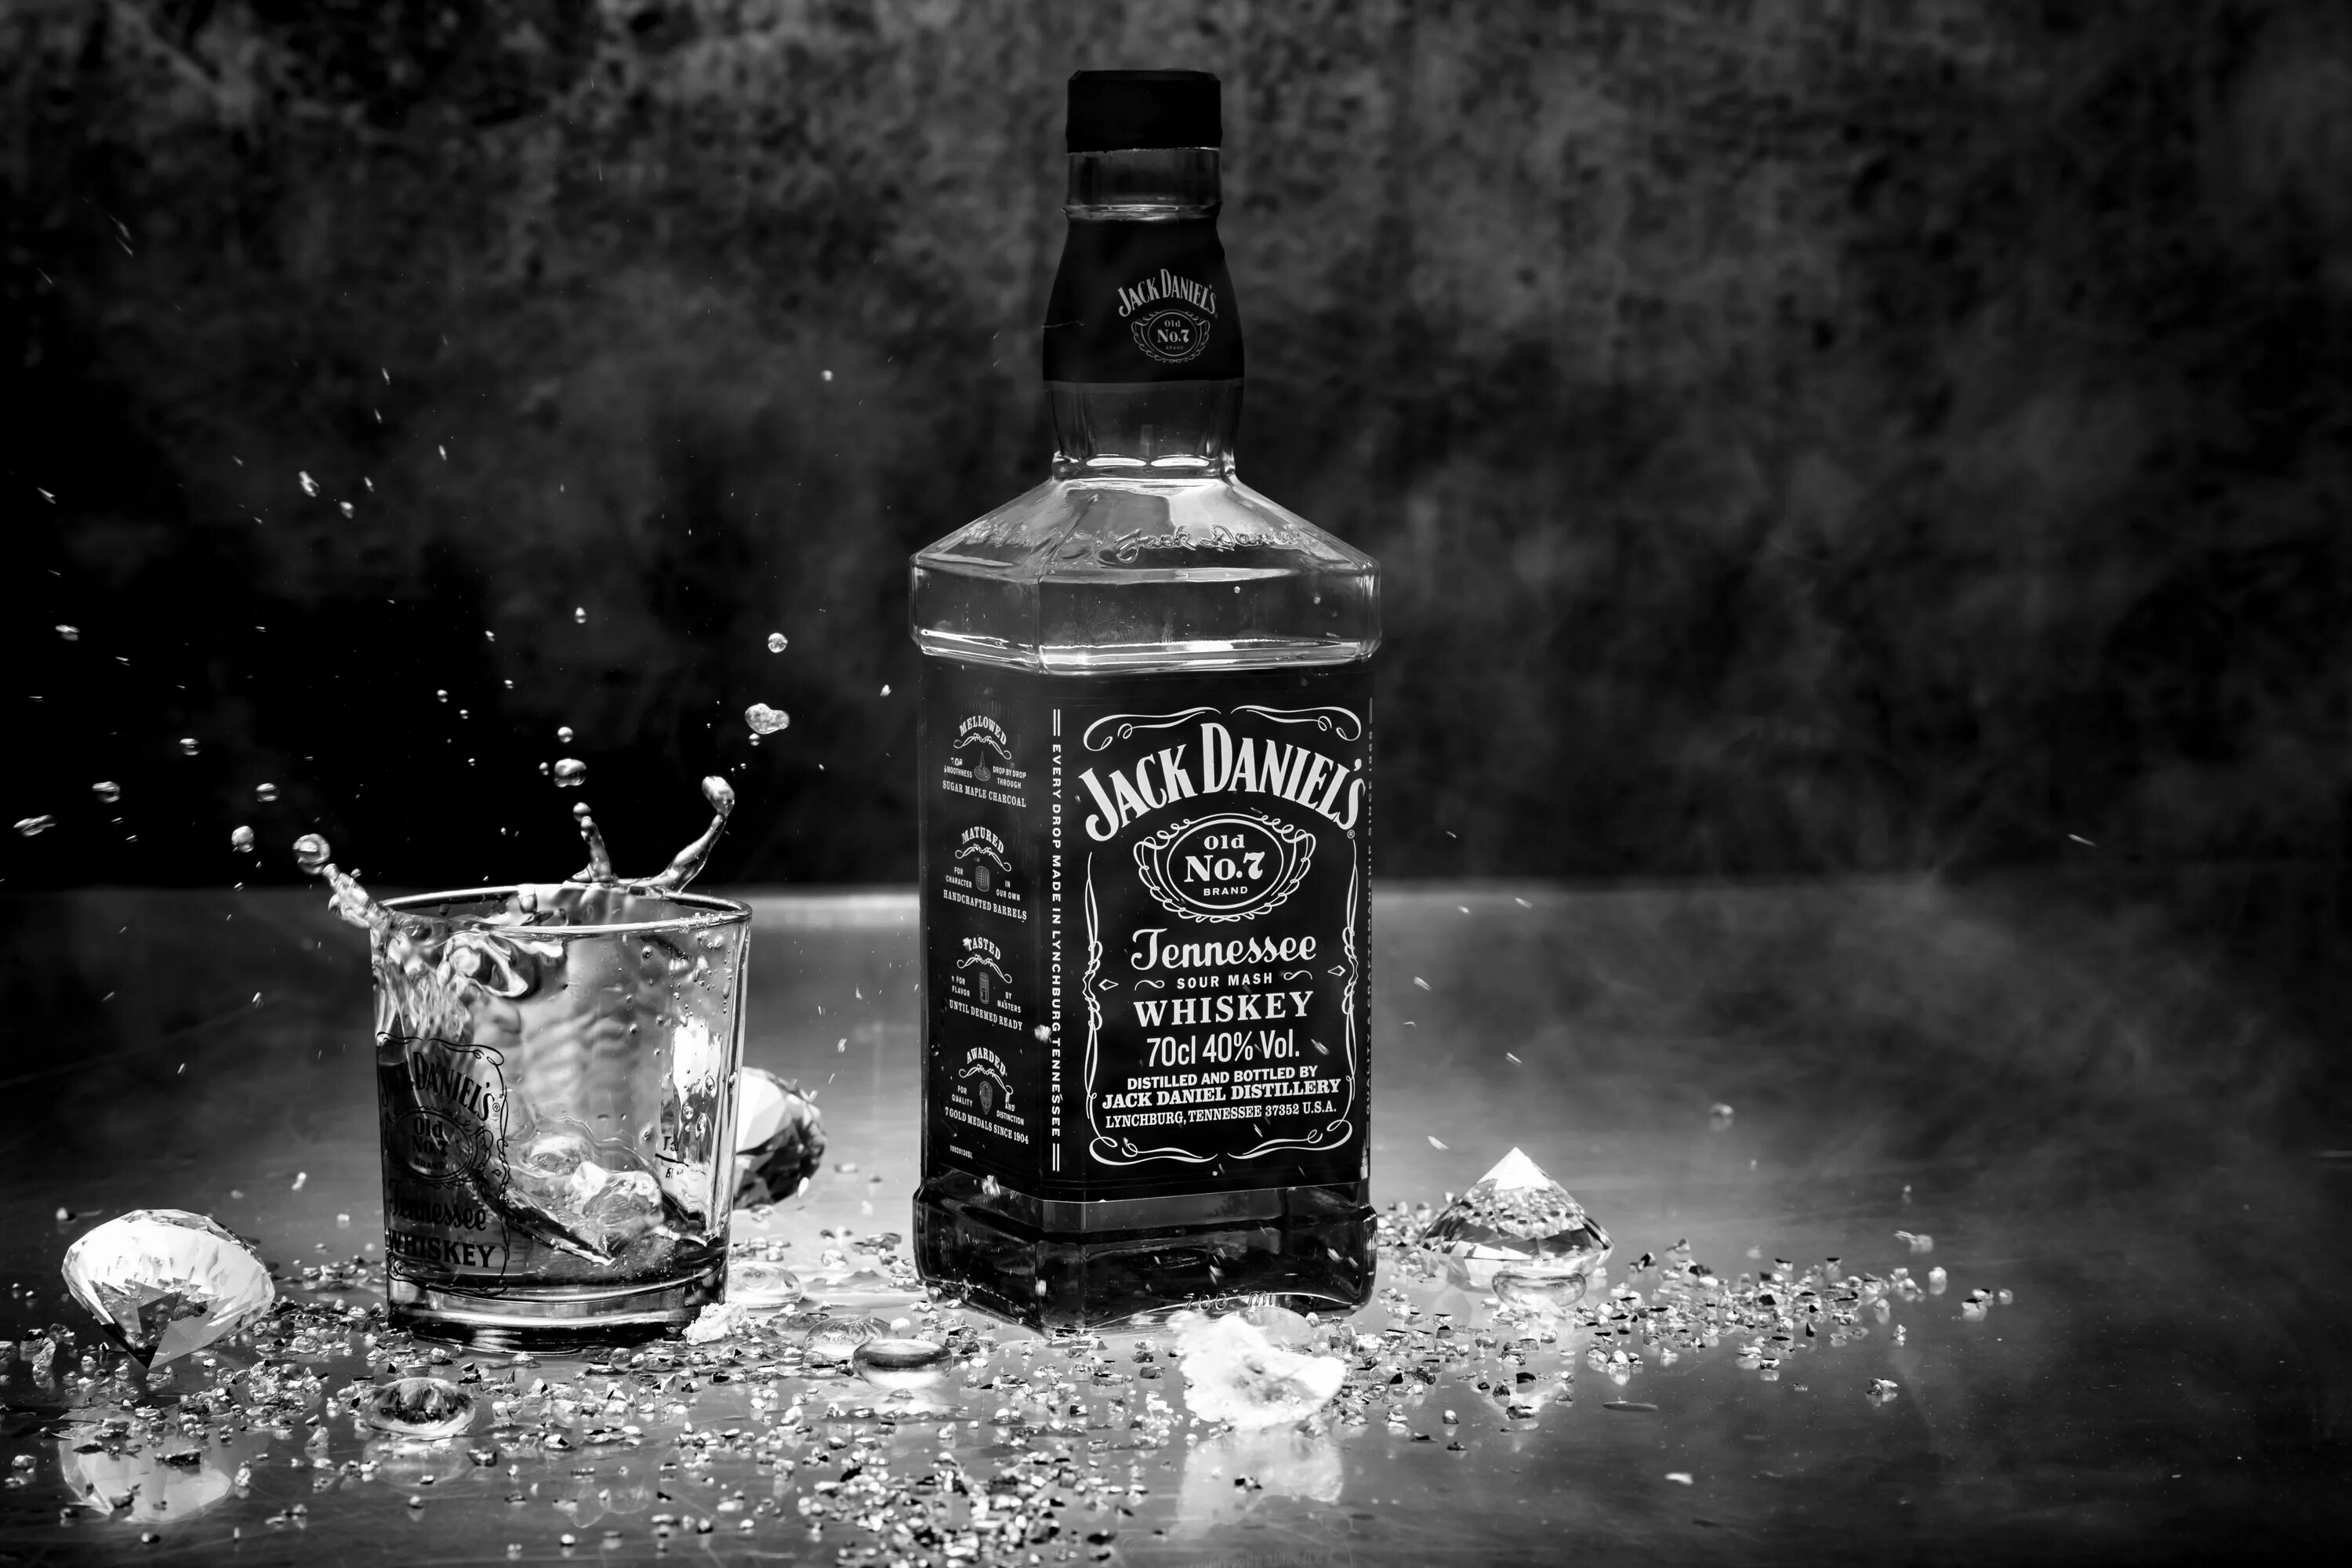 Джек дэниэлс это. Джек Дениэл. Виски Джек Дэниэлс белый. Виски Джек Дэниэлс темный. Виски Джек Дэниэлс Art.